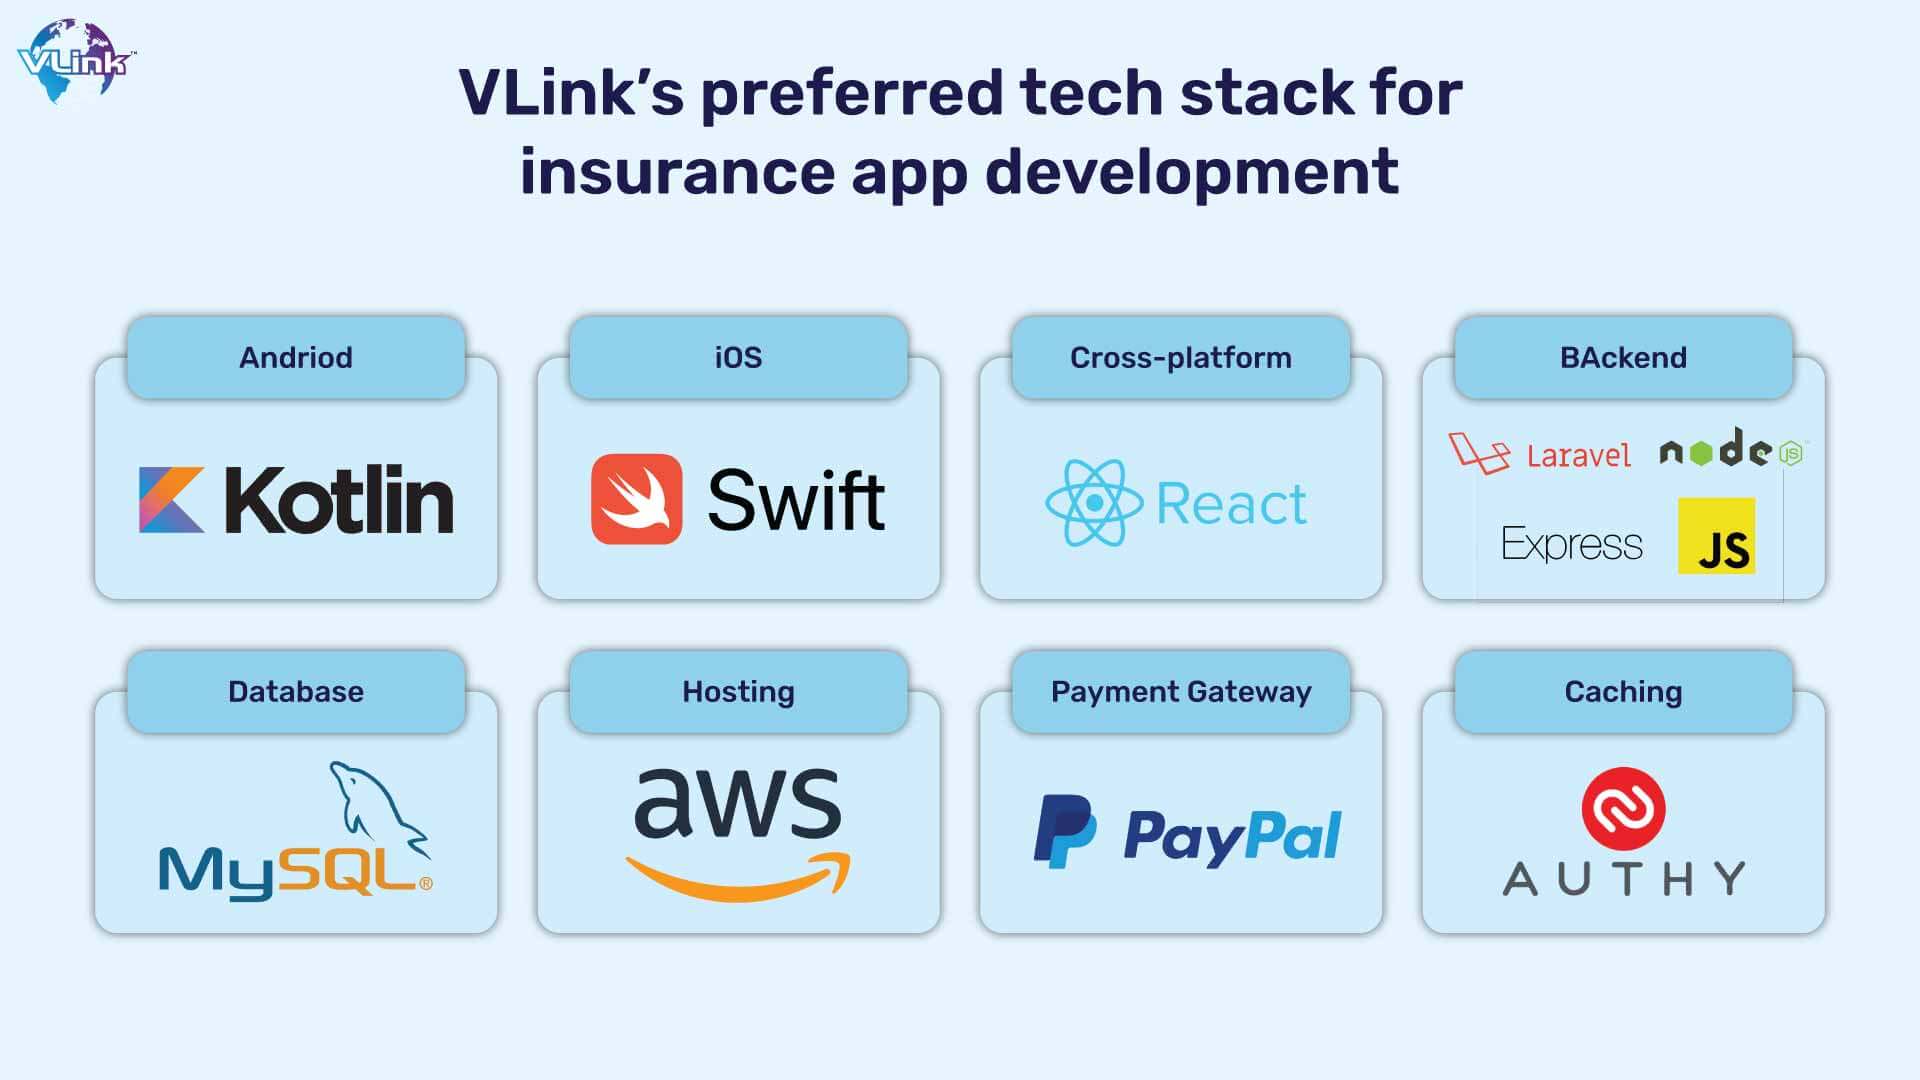 VLink’s preferred tech stack for insurance app development